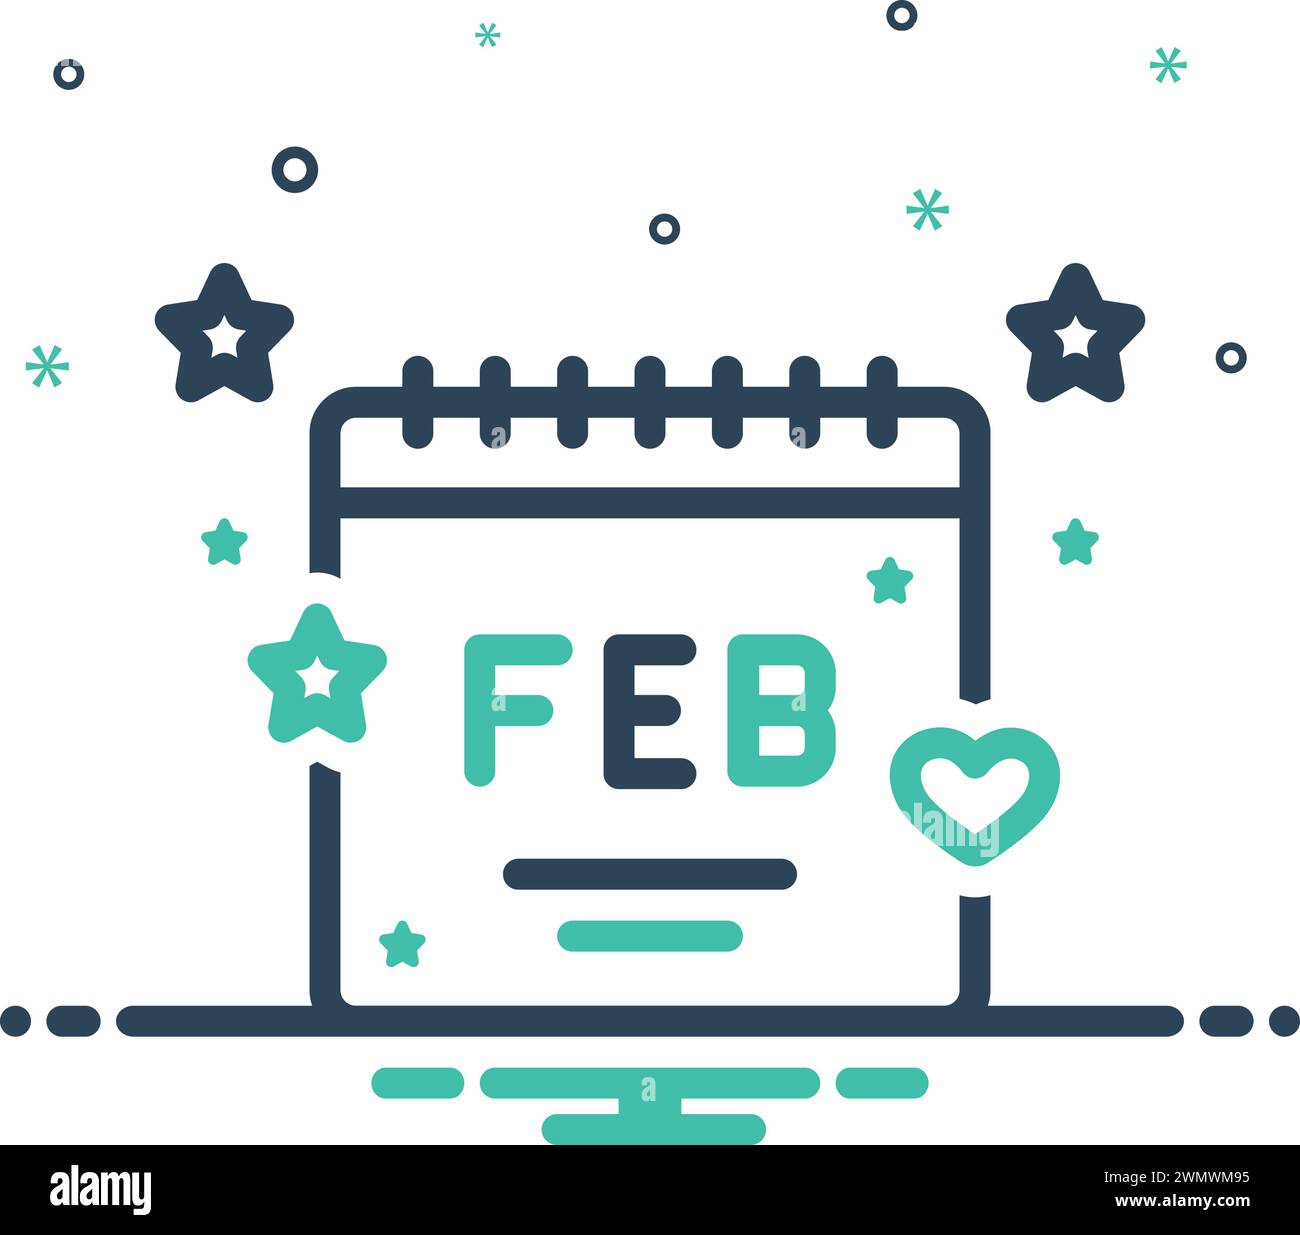 Feb month calendar Stock Vector Images - Alamy